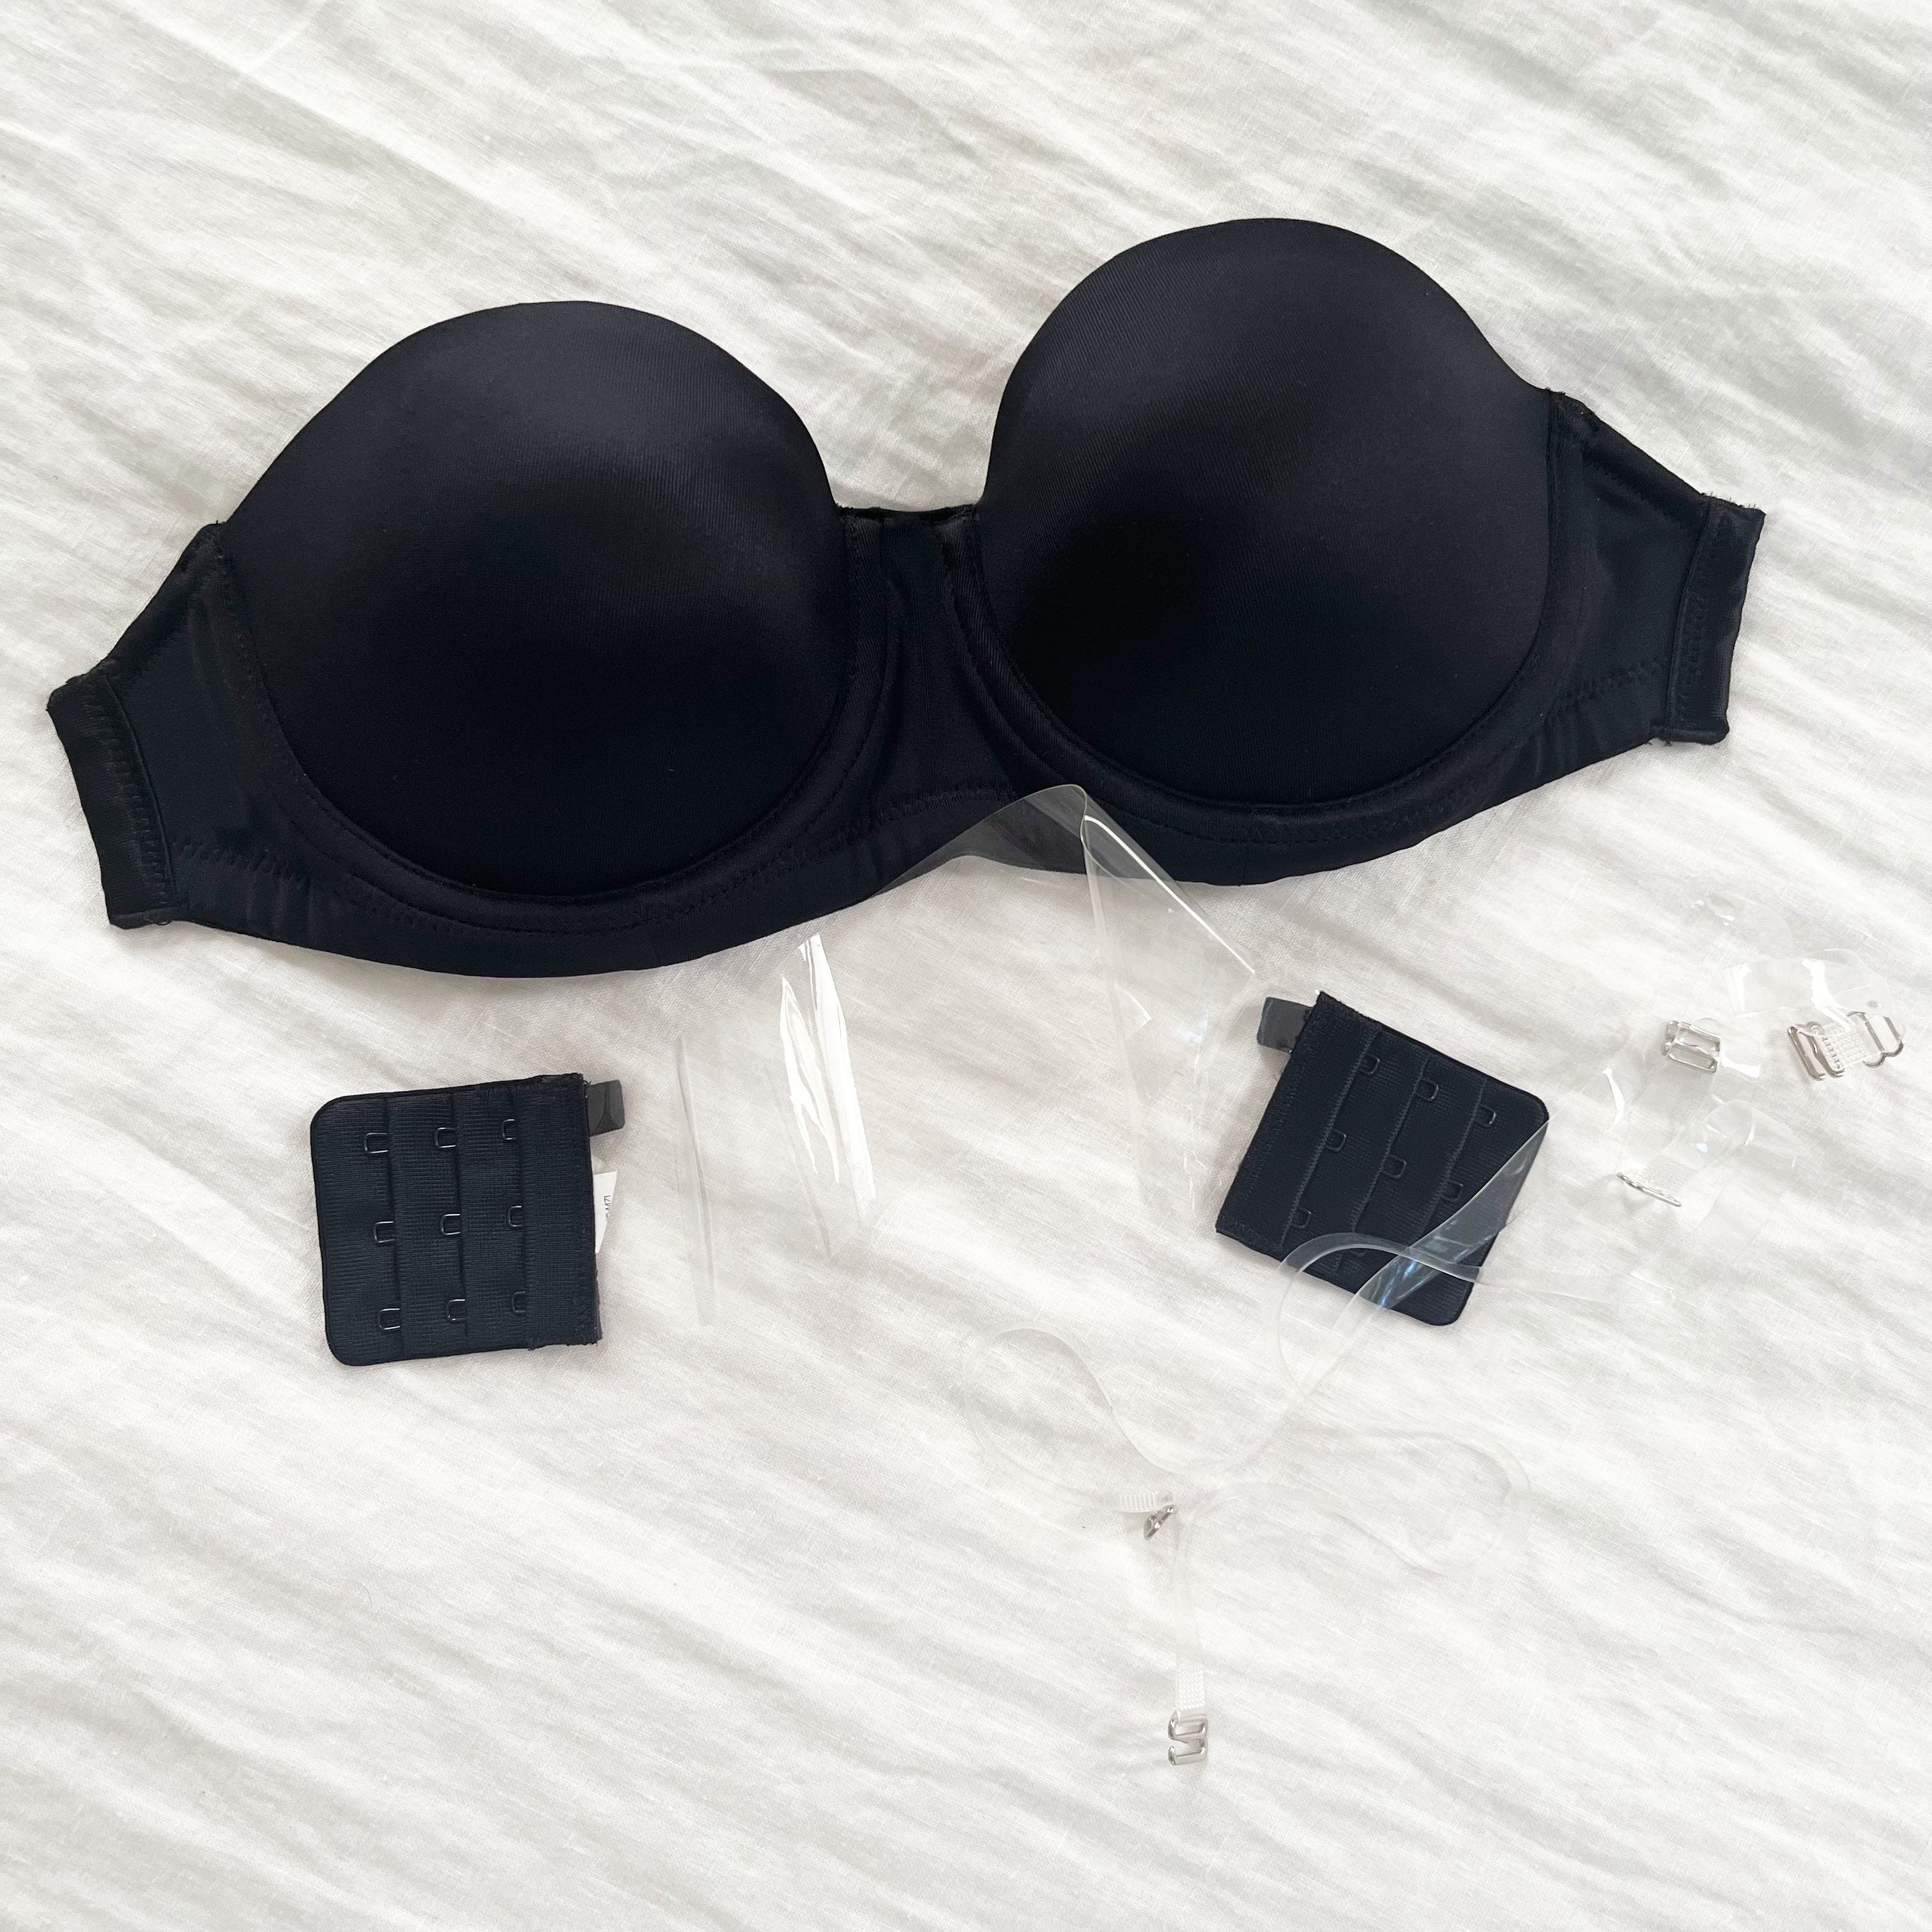 Dark Nude Clear Back Bra With Padding - Select Size – Rockin' A B